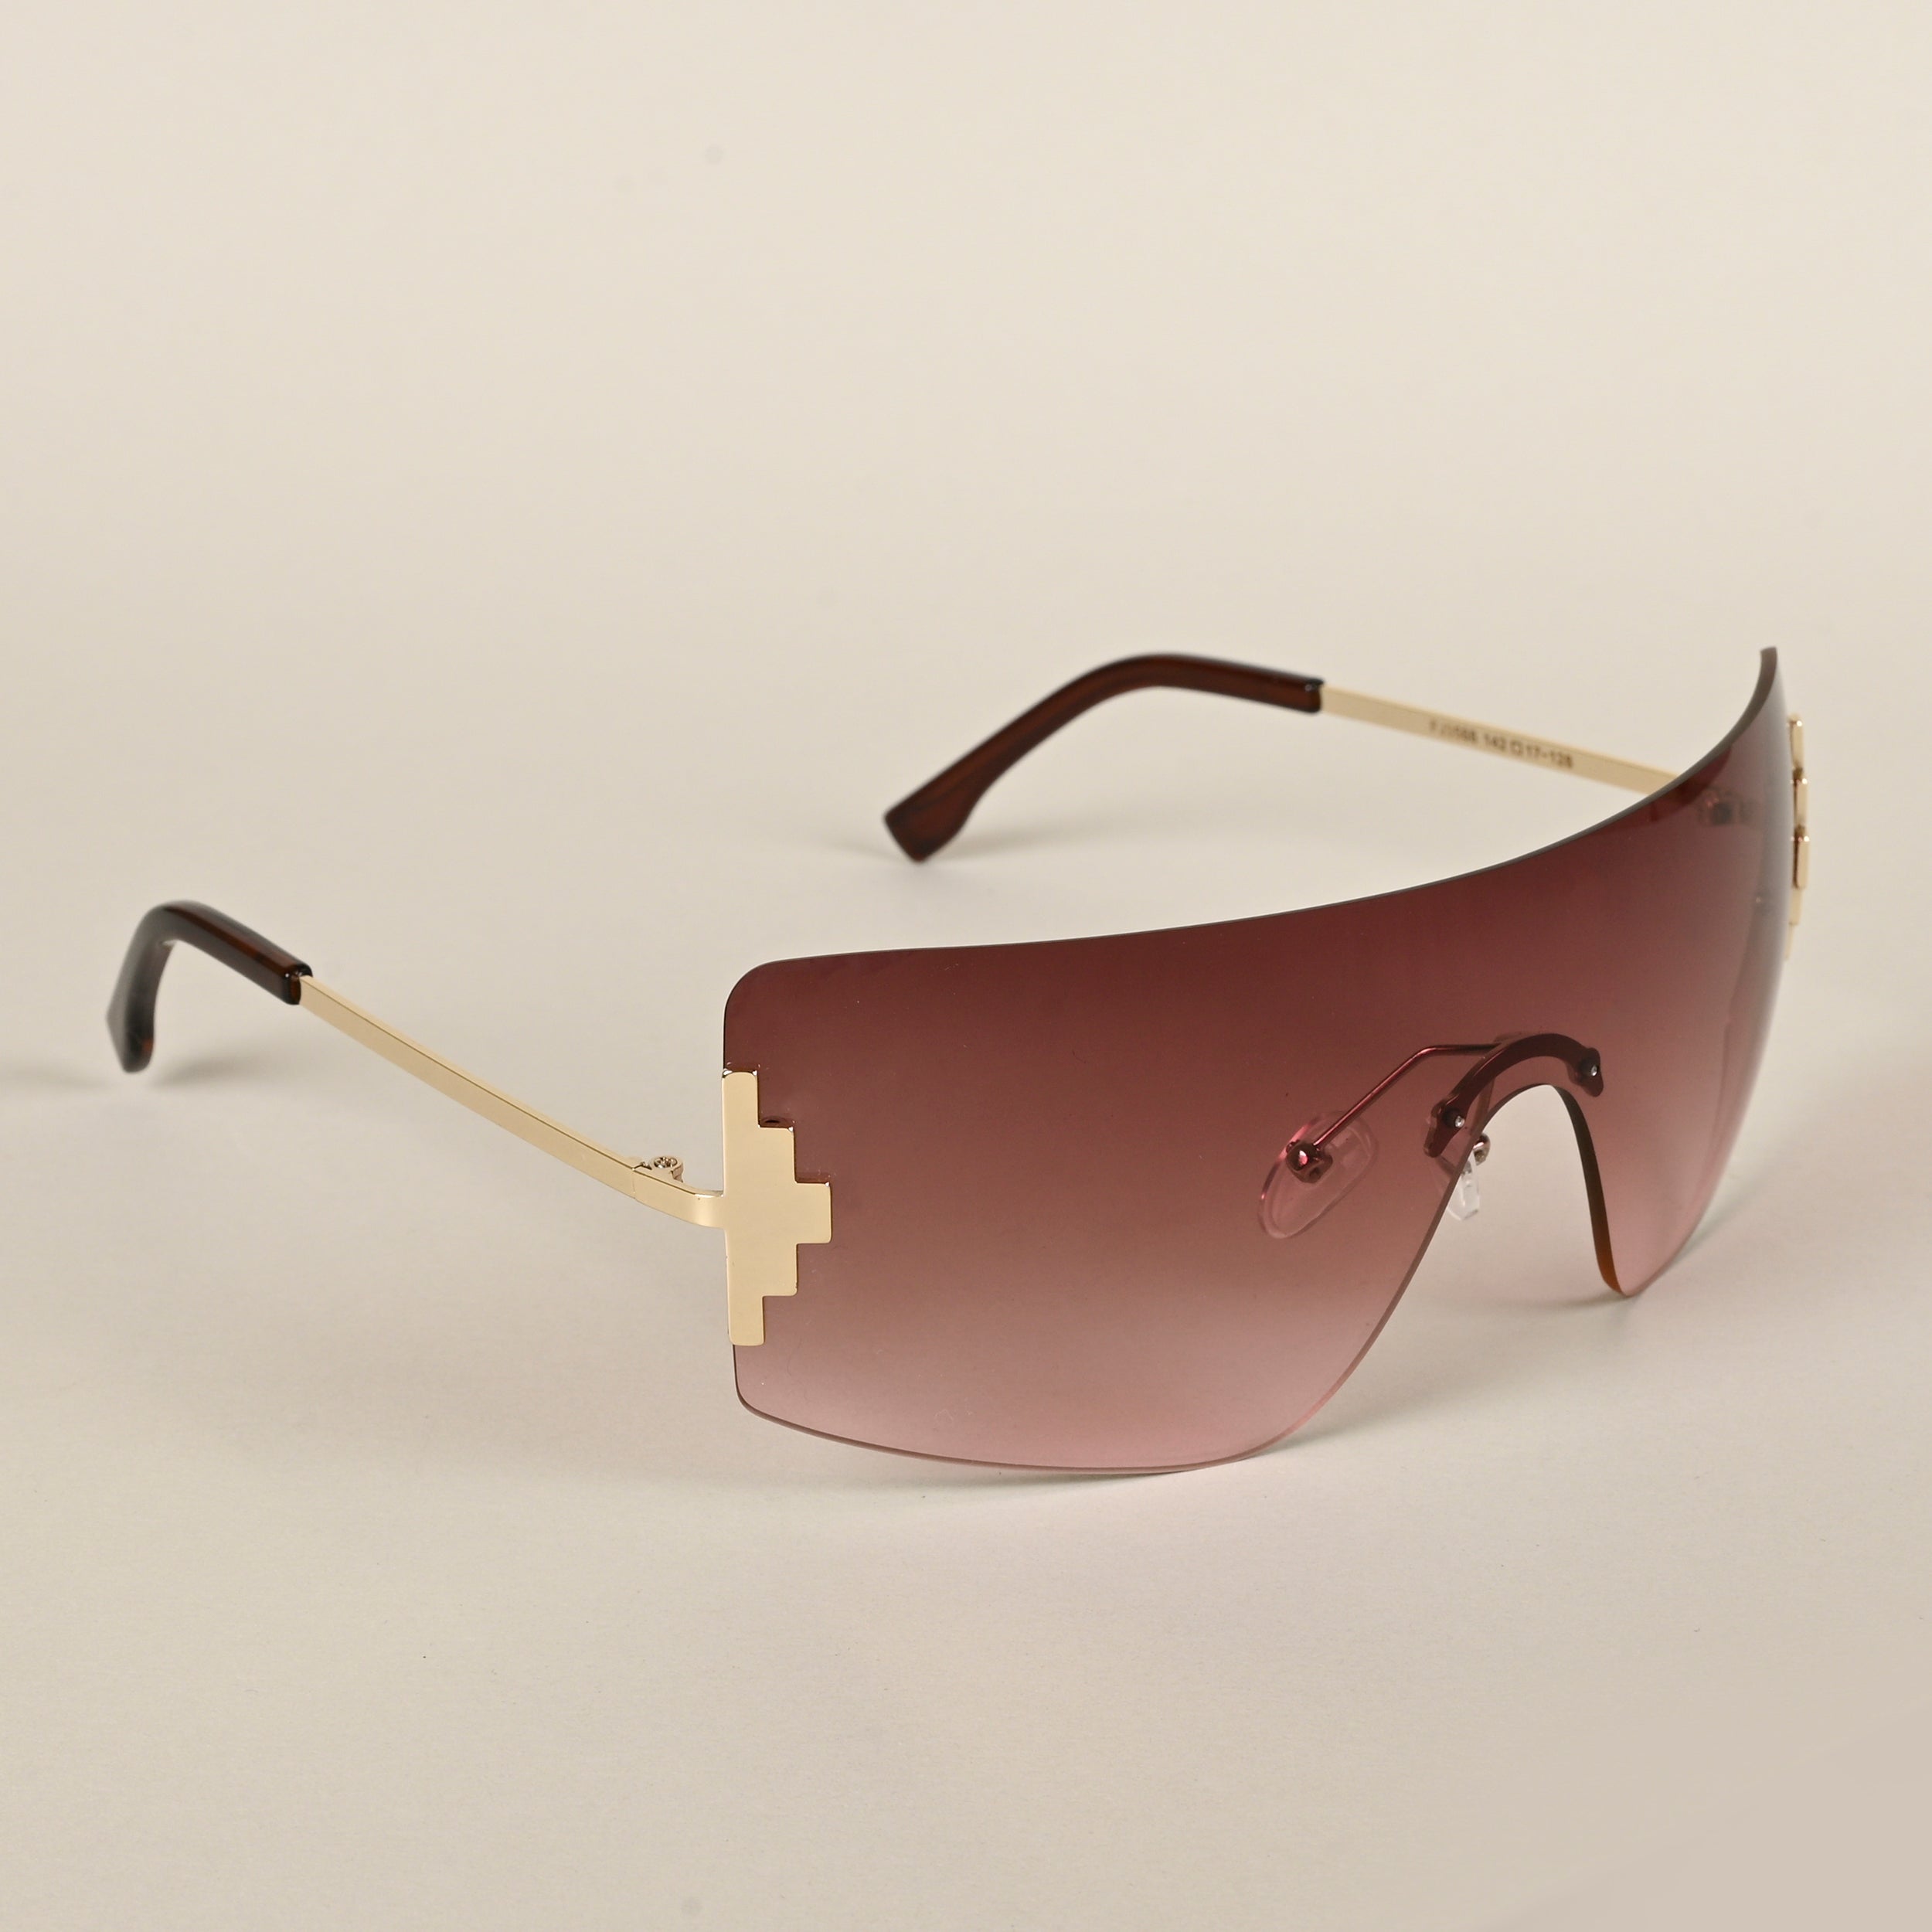 Voyage Brown Wrap Around Sunglasses for Men & Women (3568MG4120)